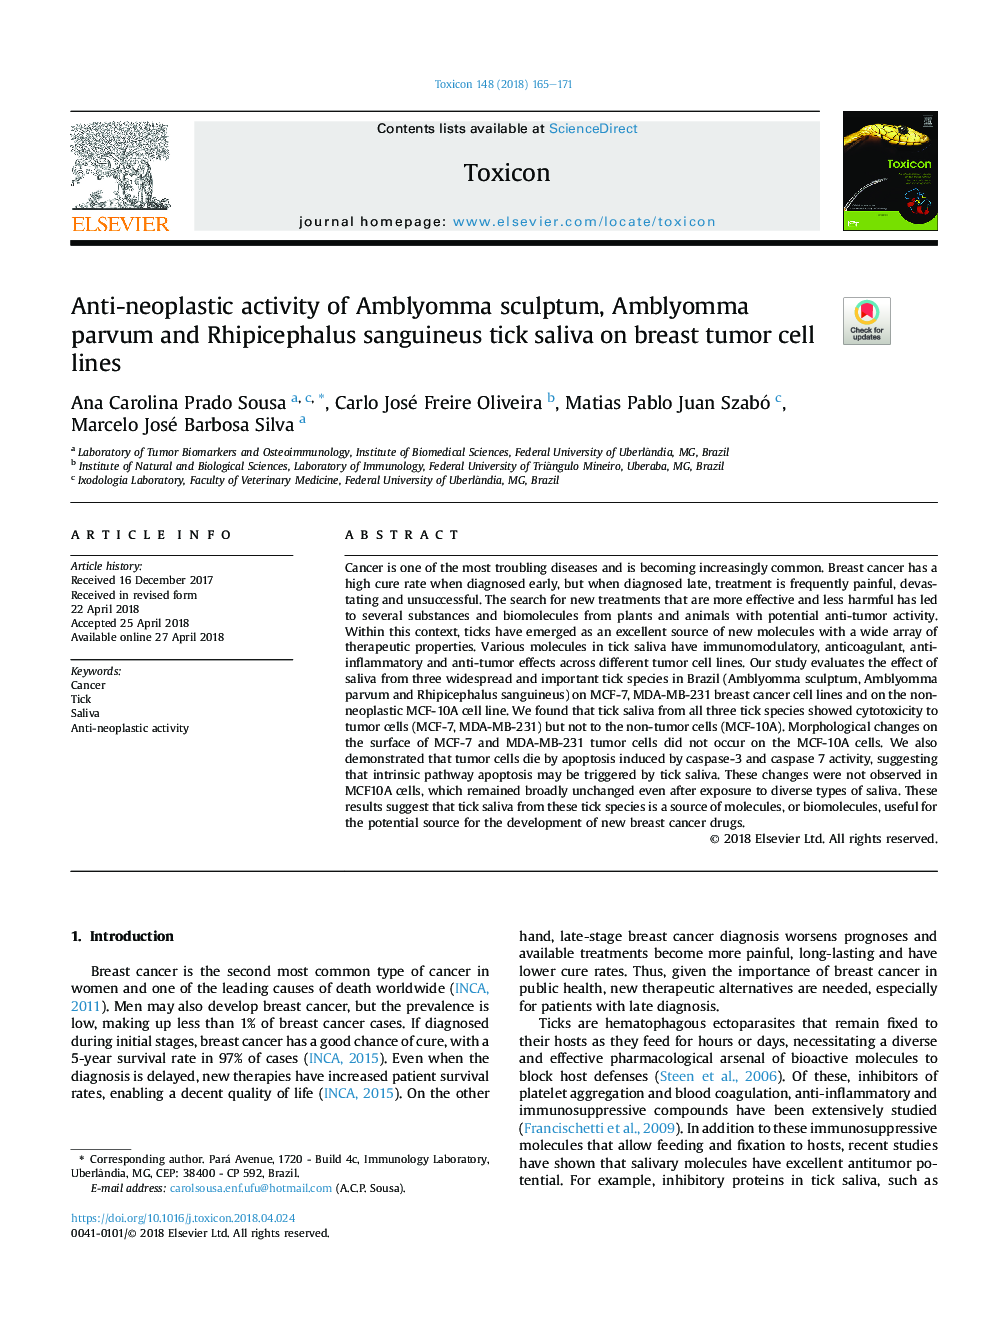 Anti-neoplastic activity of Amblyomma sculptum, Amblyomma parvum and Rhipicephalus sanguineus tick saliva on breast tumor cell lines